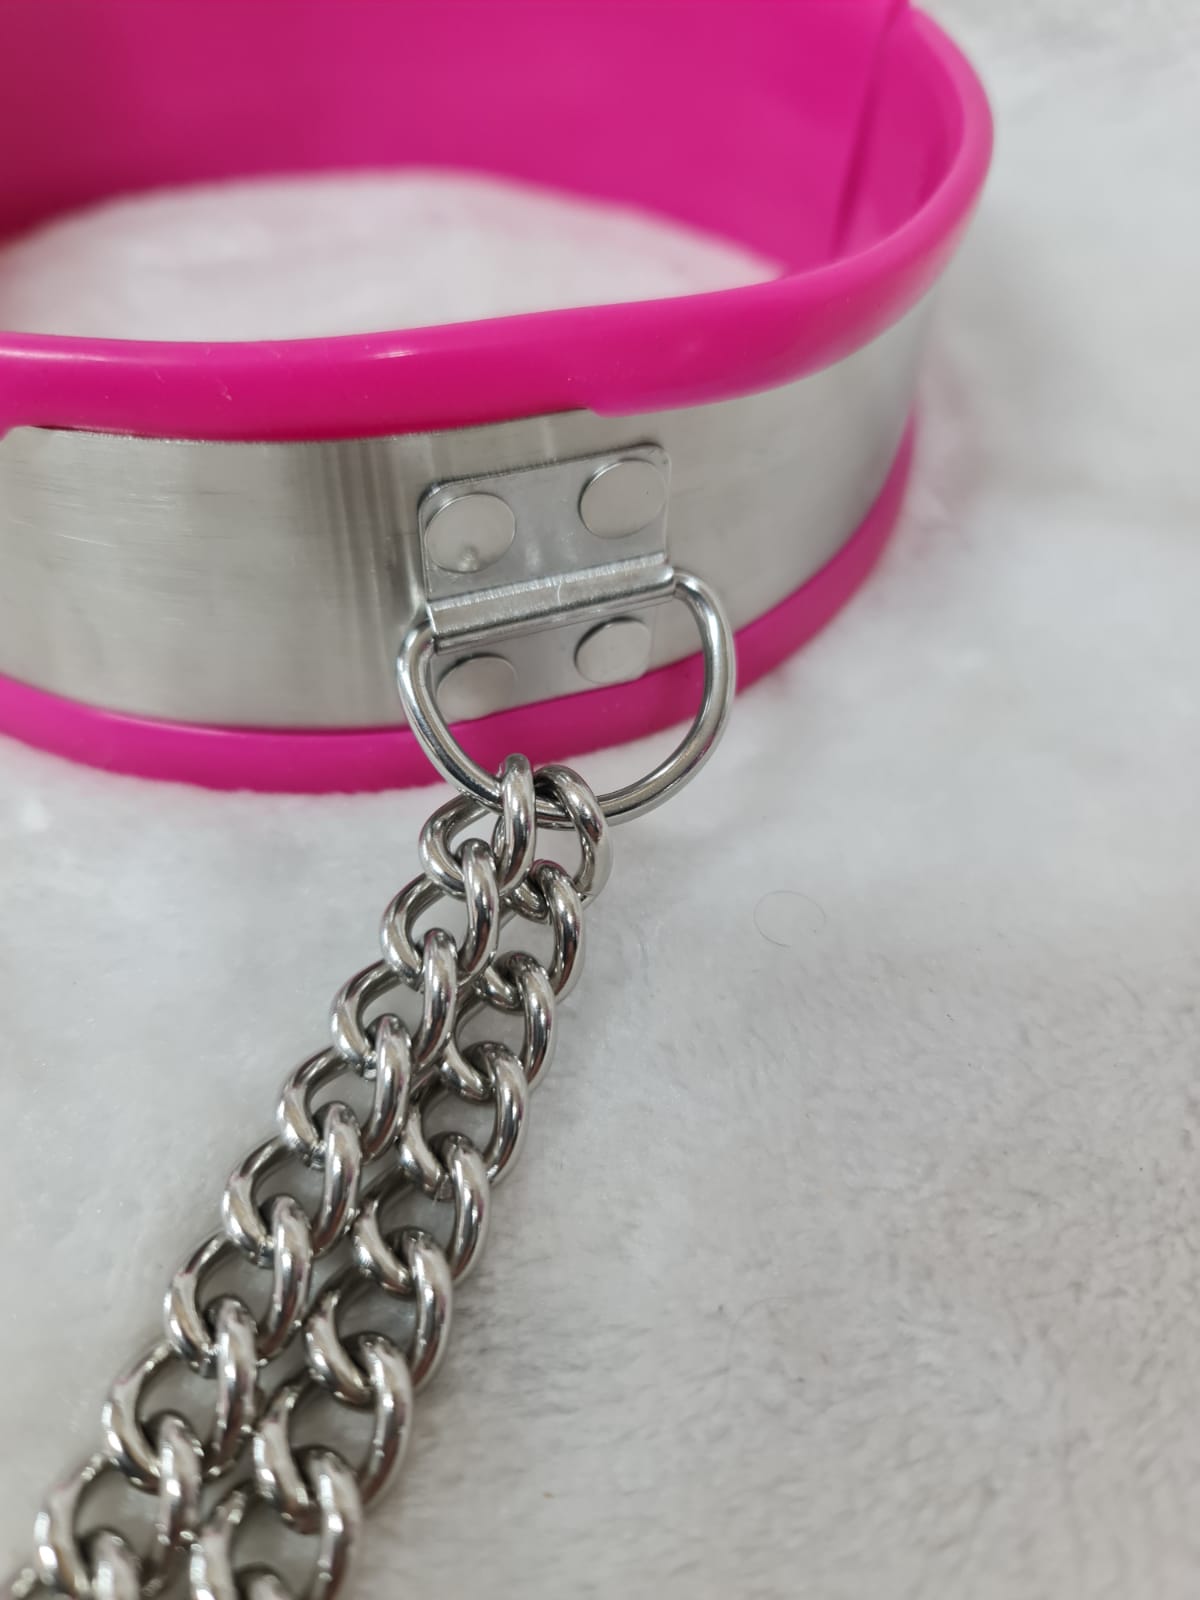 Chastity Belt w/ Thigh Cuffs & 2 Plugs (Female, Pink)